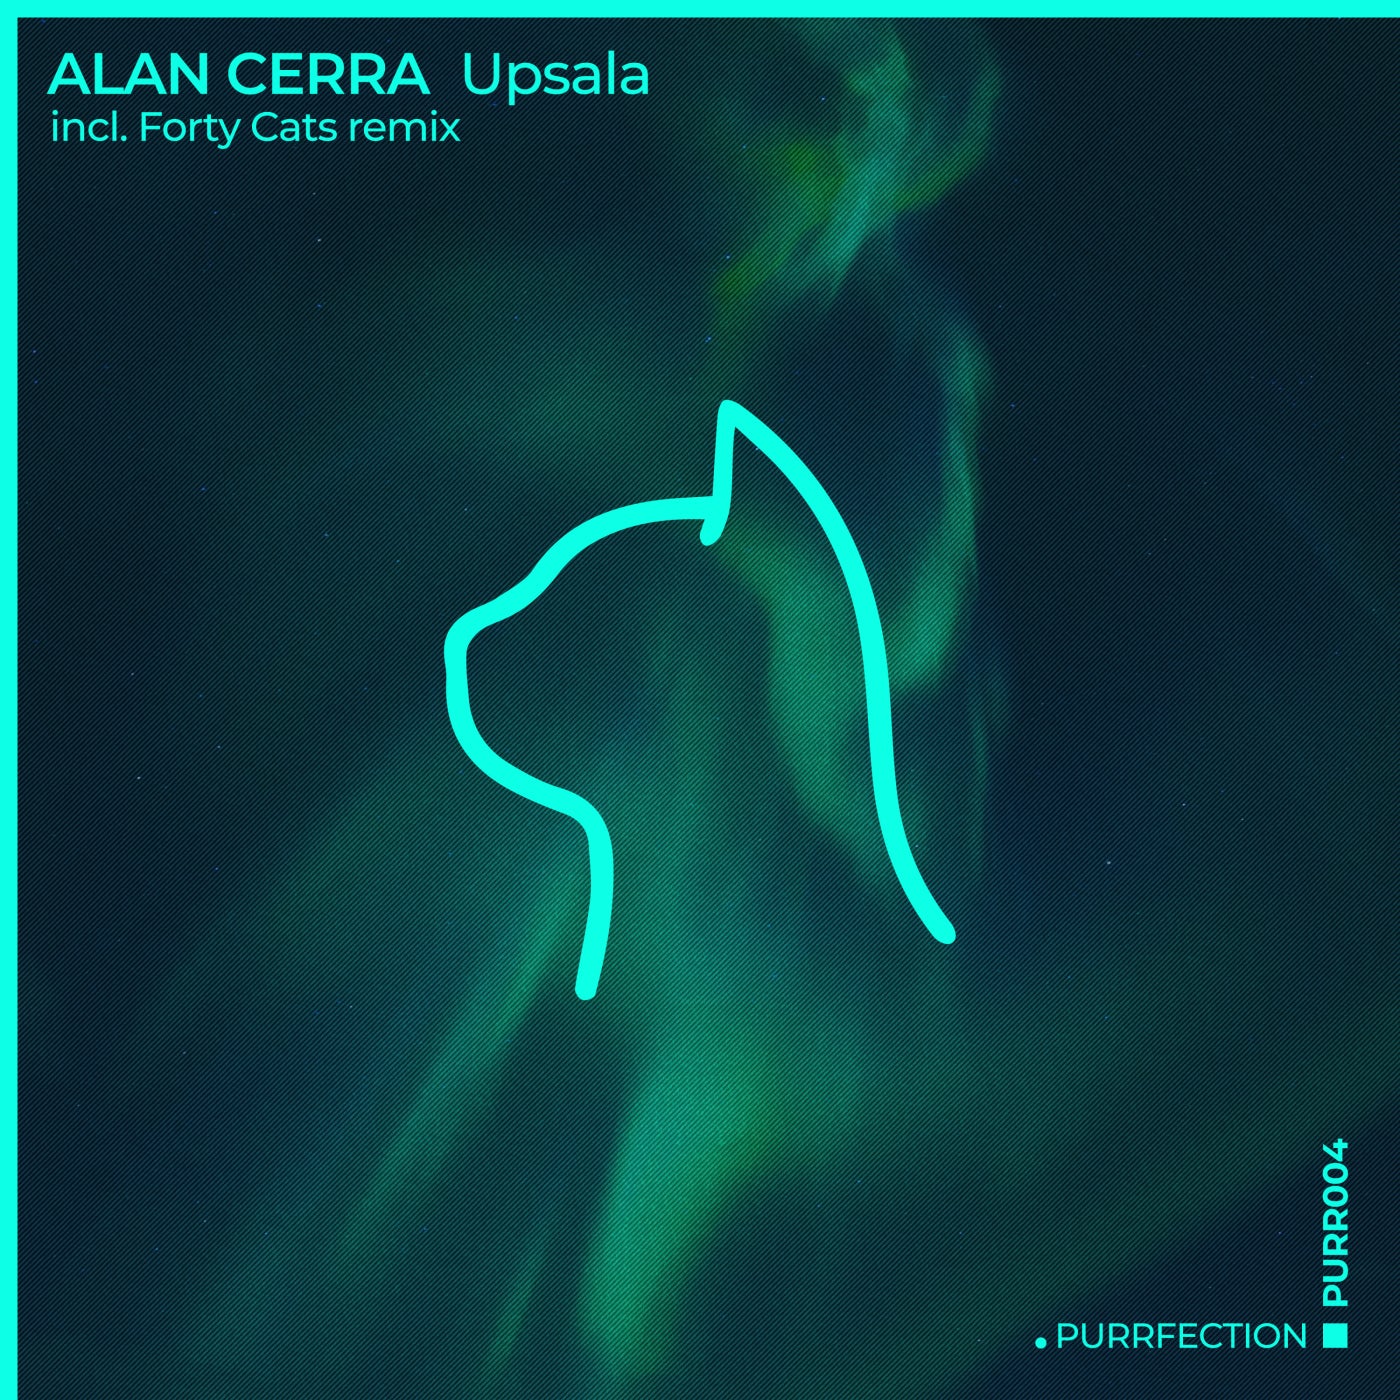 Cover - Alan Cerra - Upsala (Forty Cats Remix)